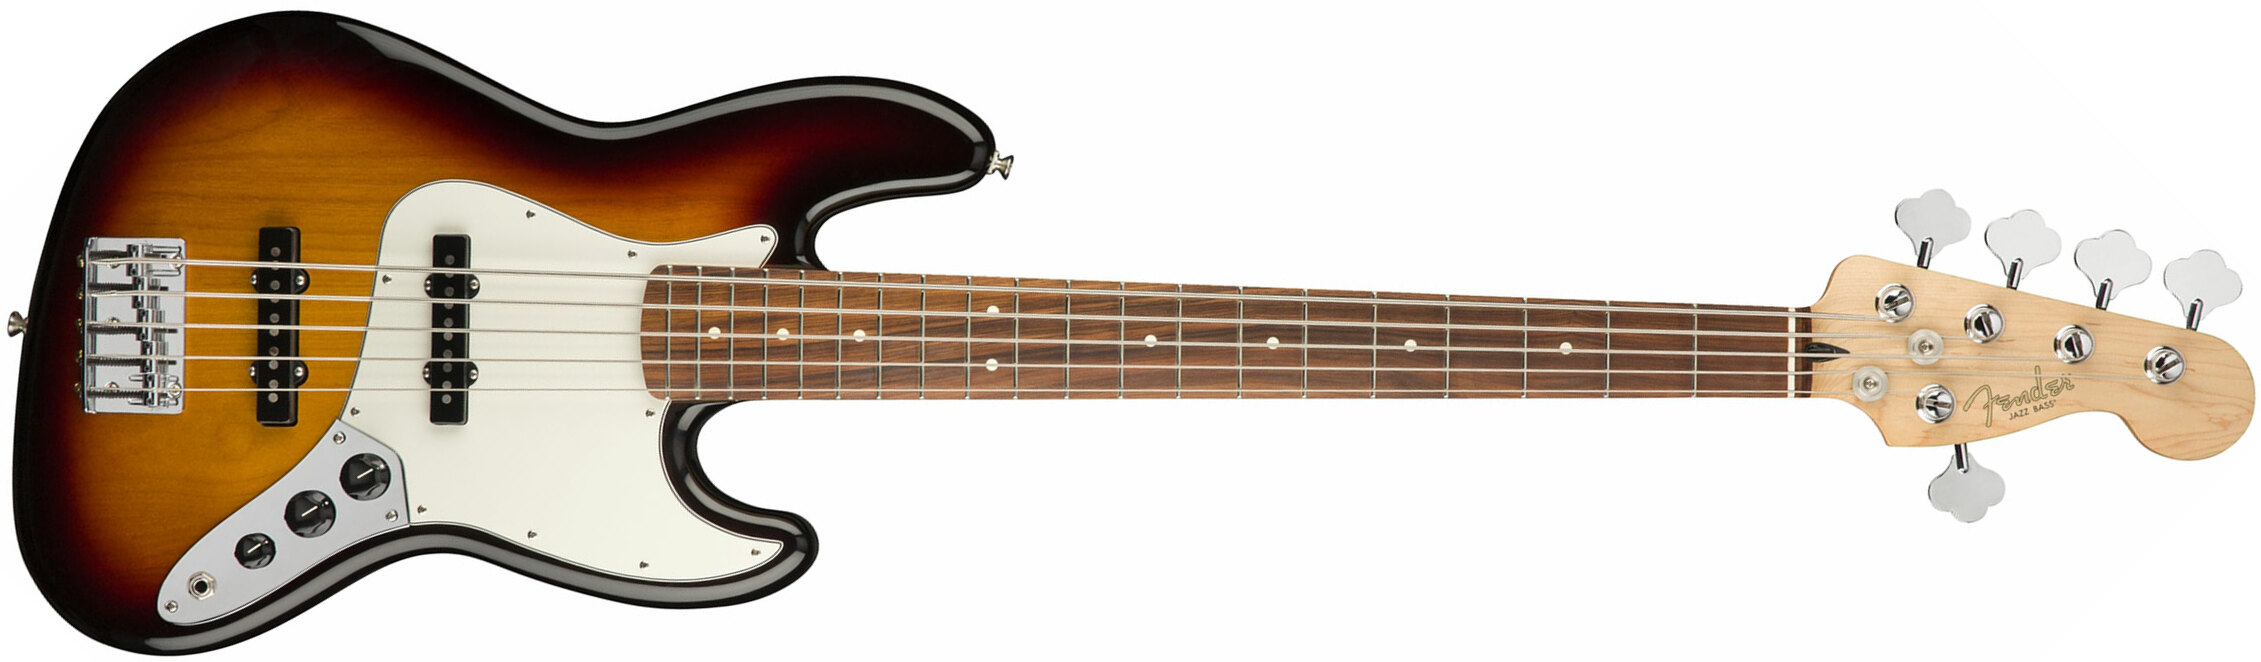 Fender Jazz Bass Player V 5-cordes Mex Pf - 3-color Sunburst - Solidbody E-bass - Main picture